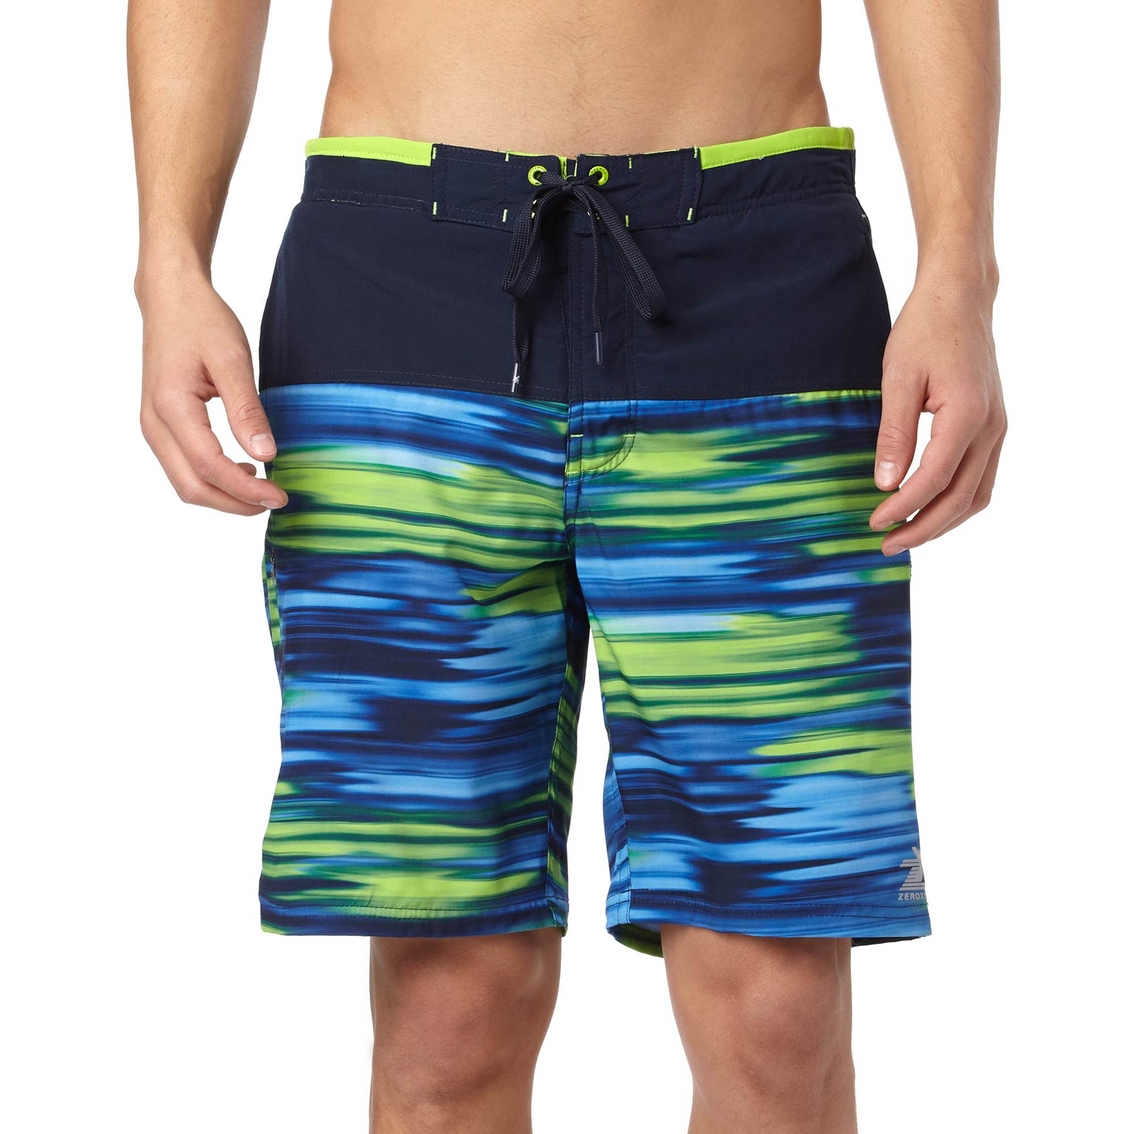 Zeroxposur Hella Clash Board Shorts | Swimwear | Clothing & Accessories ...